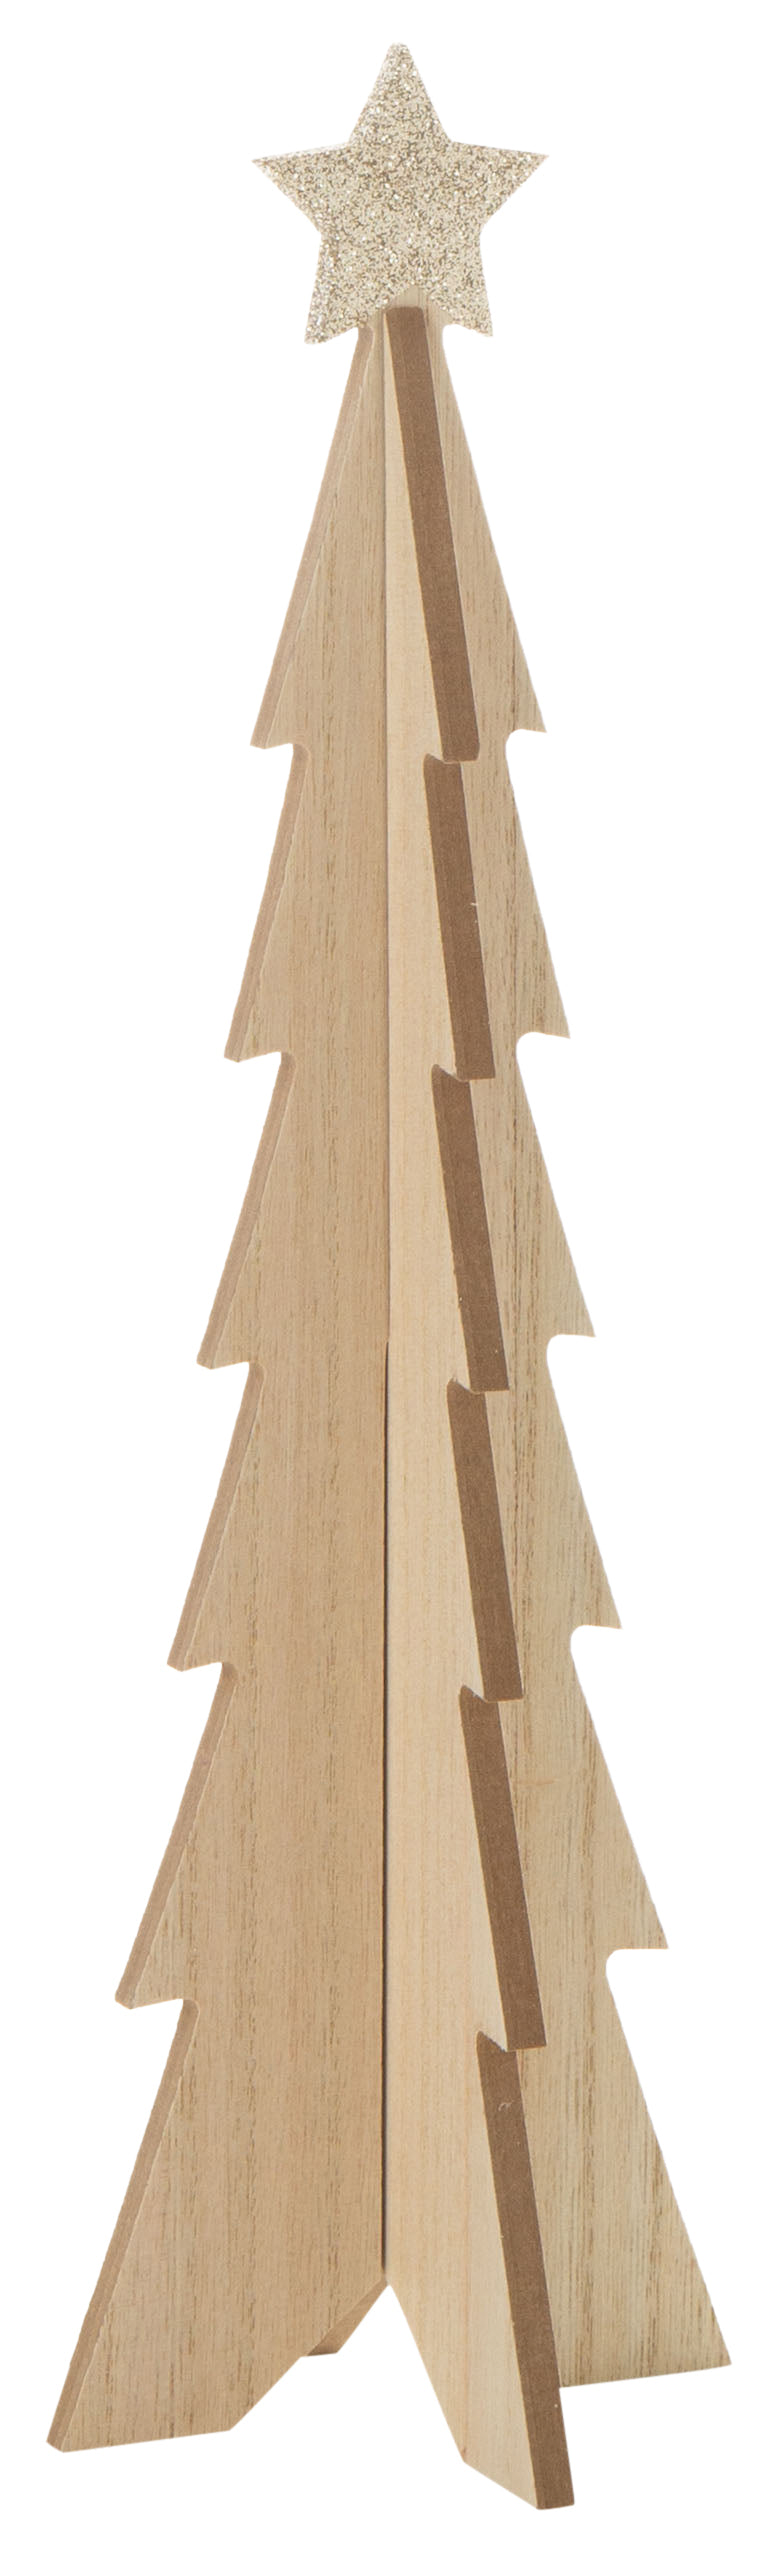 3D Wooden Tabletop Tree